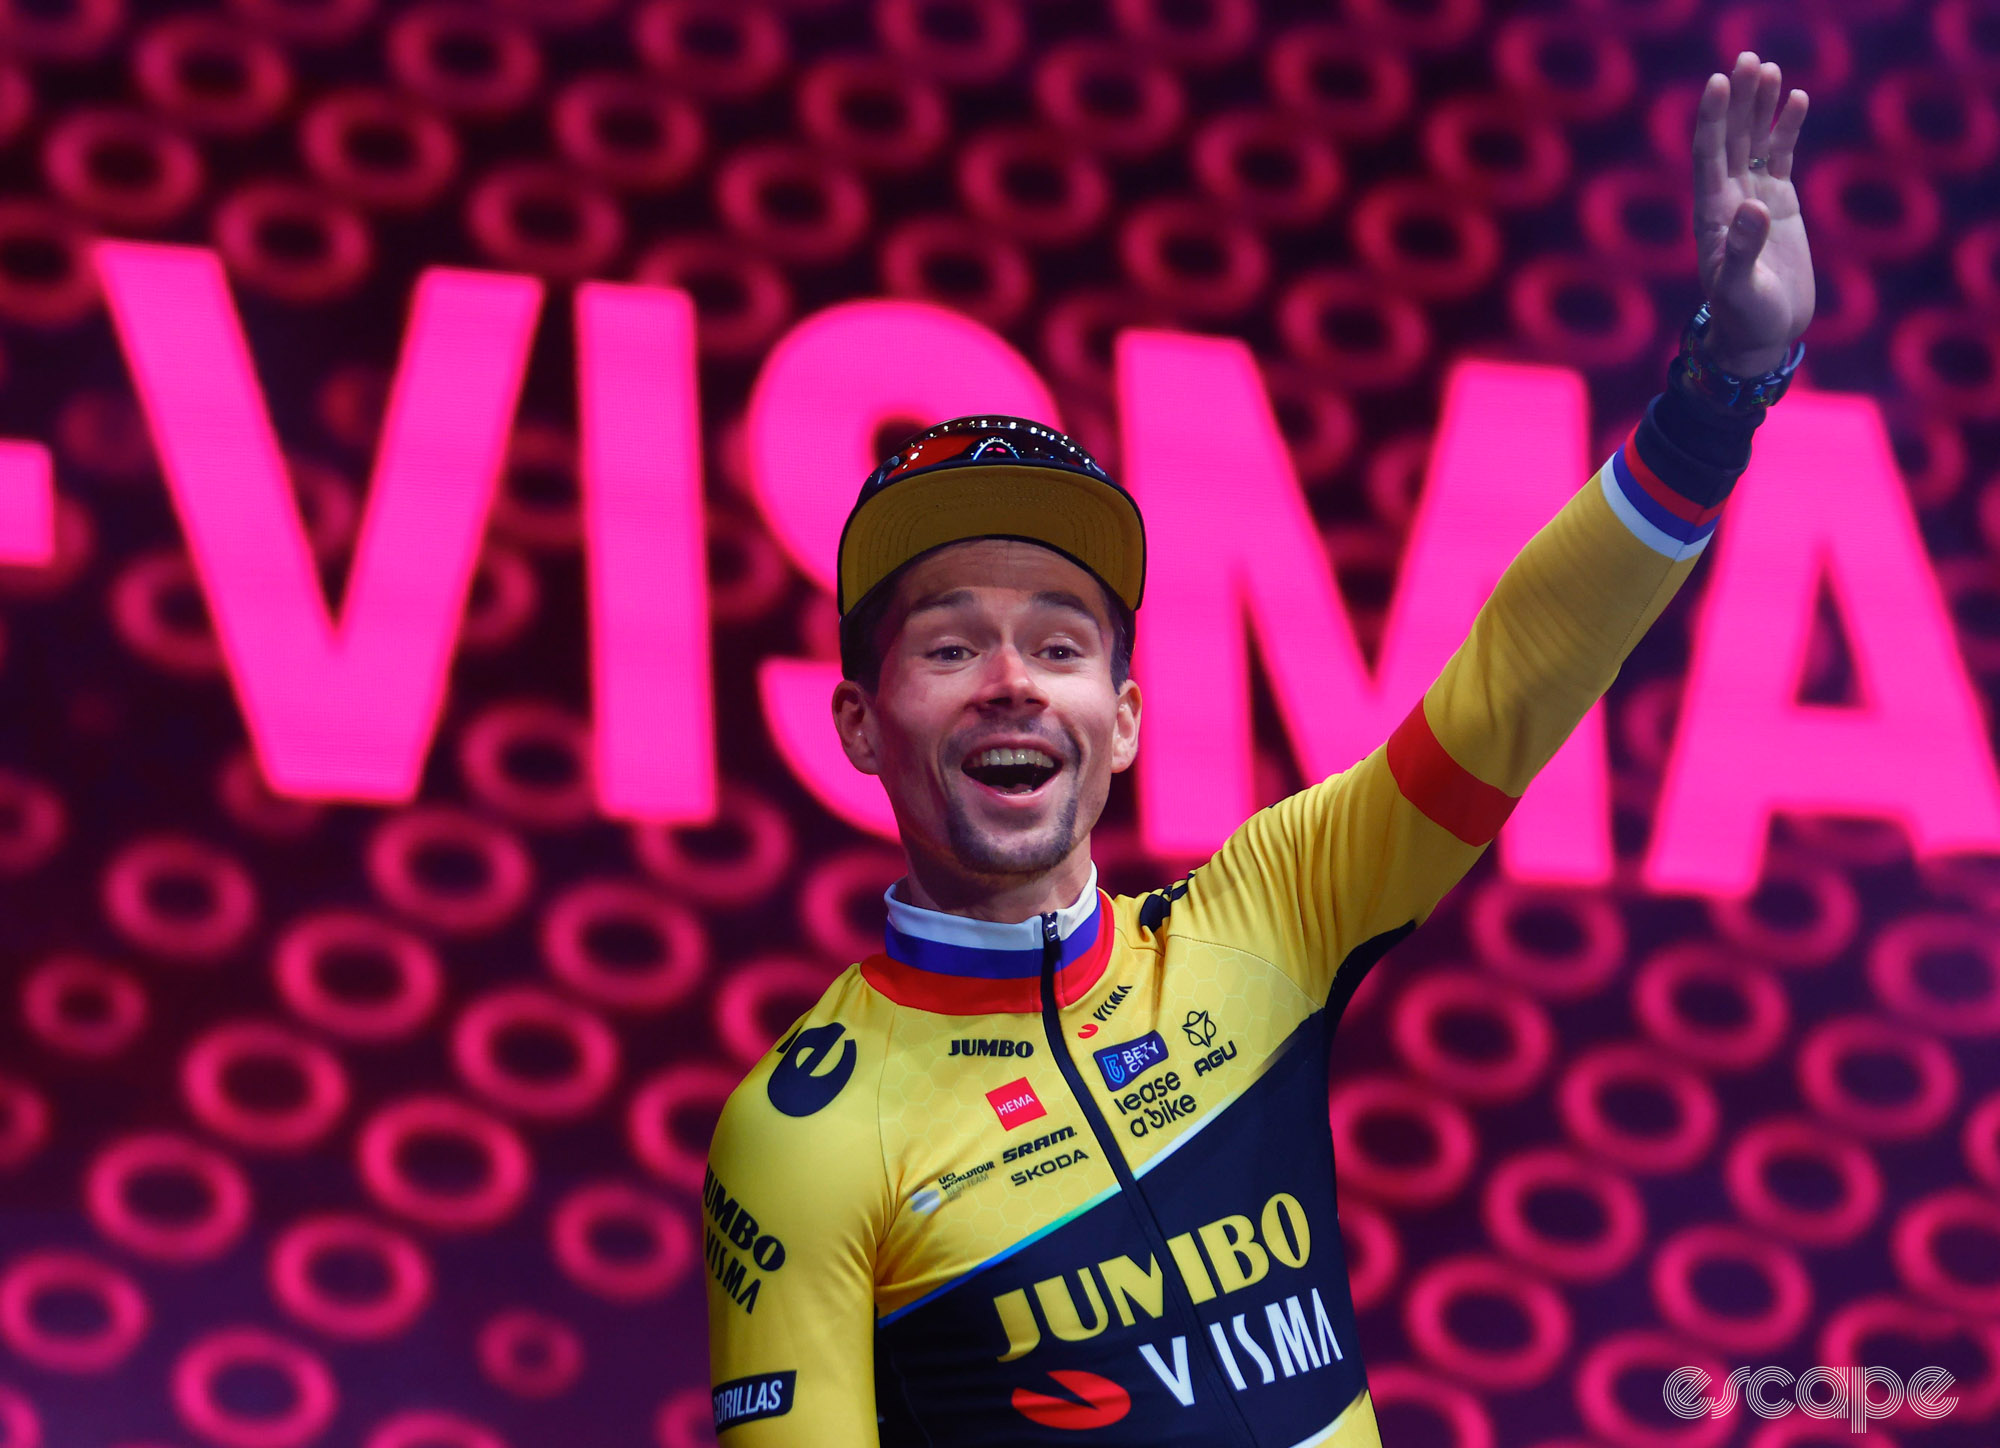 10 highlights, broadly speaking, of the Giro d'Italia teams ...